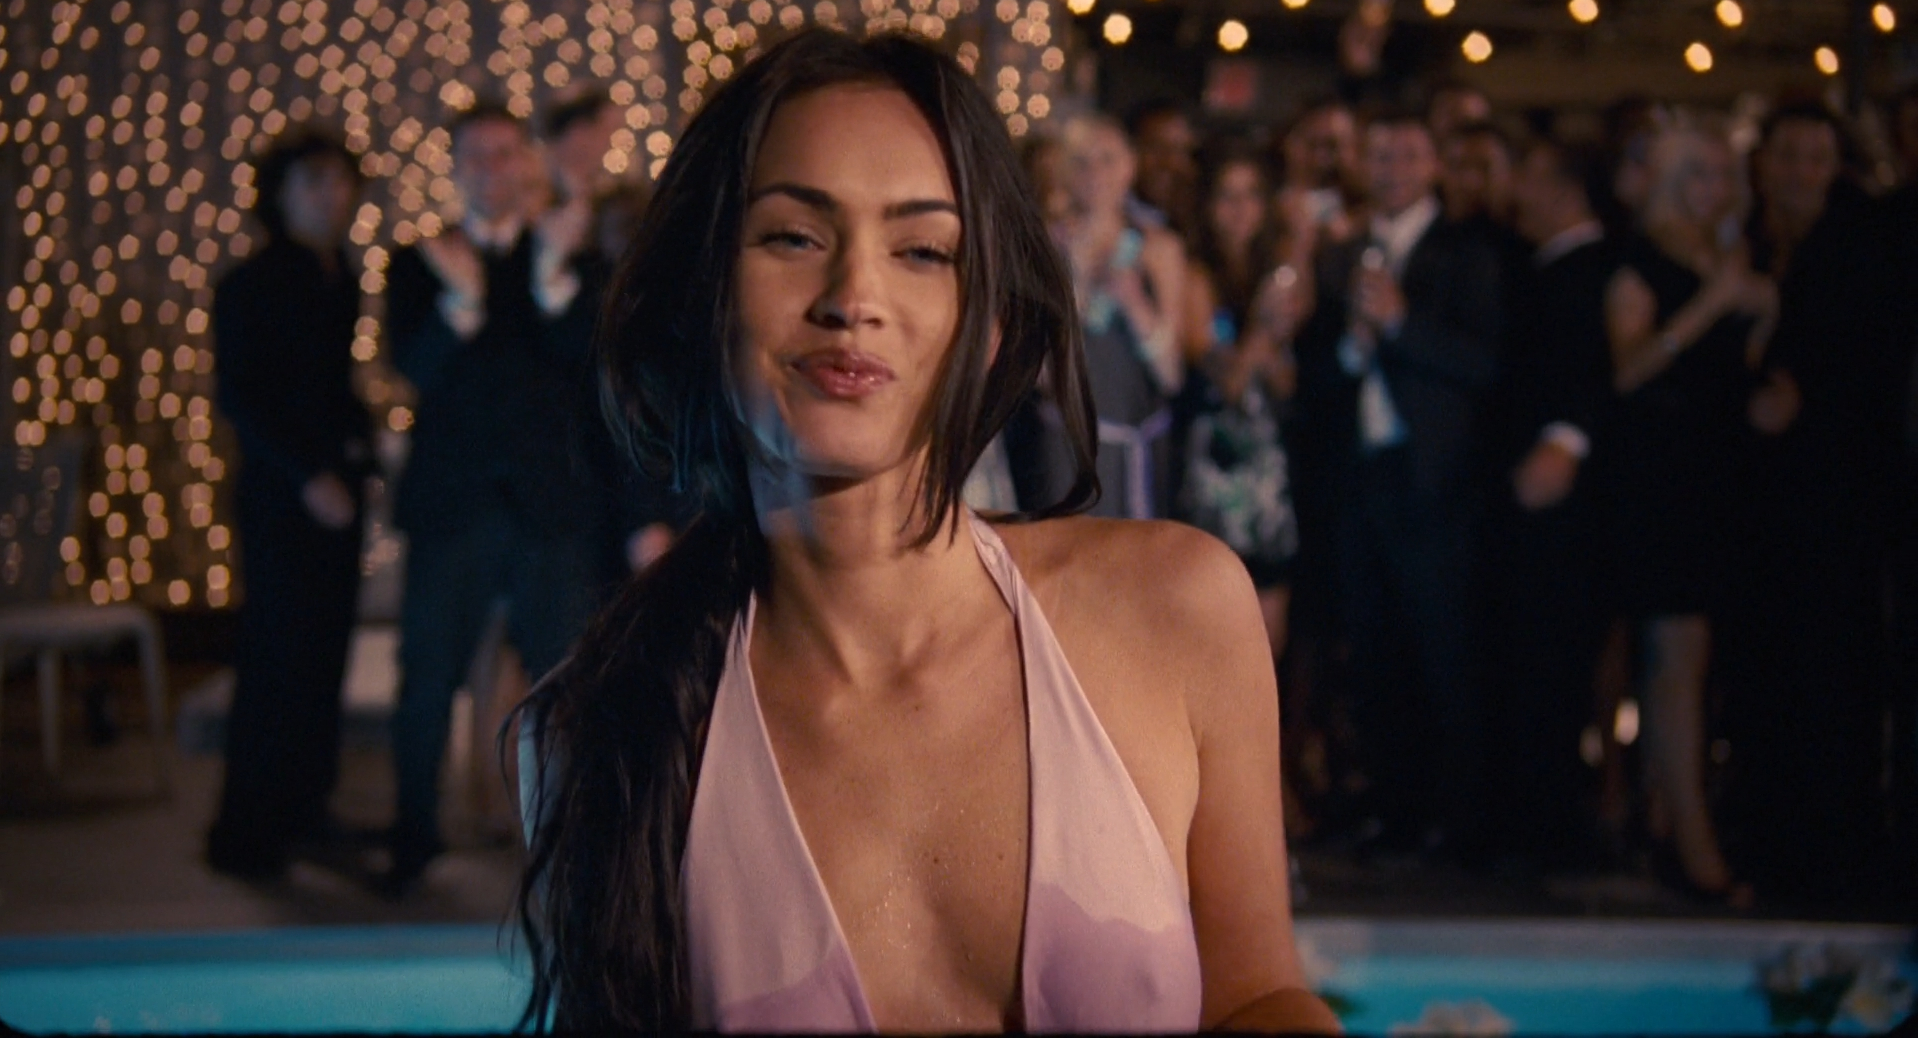 Stunning Megan Fox Showing Her Perfect Pokies in Her Sexy Pool Scene